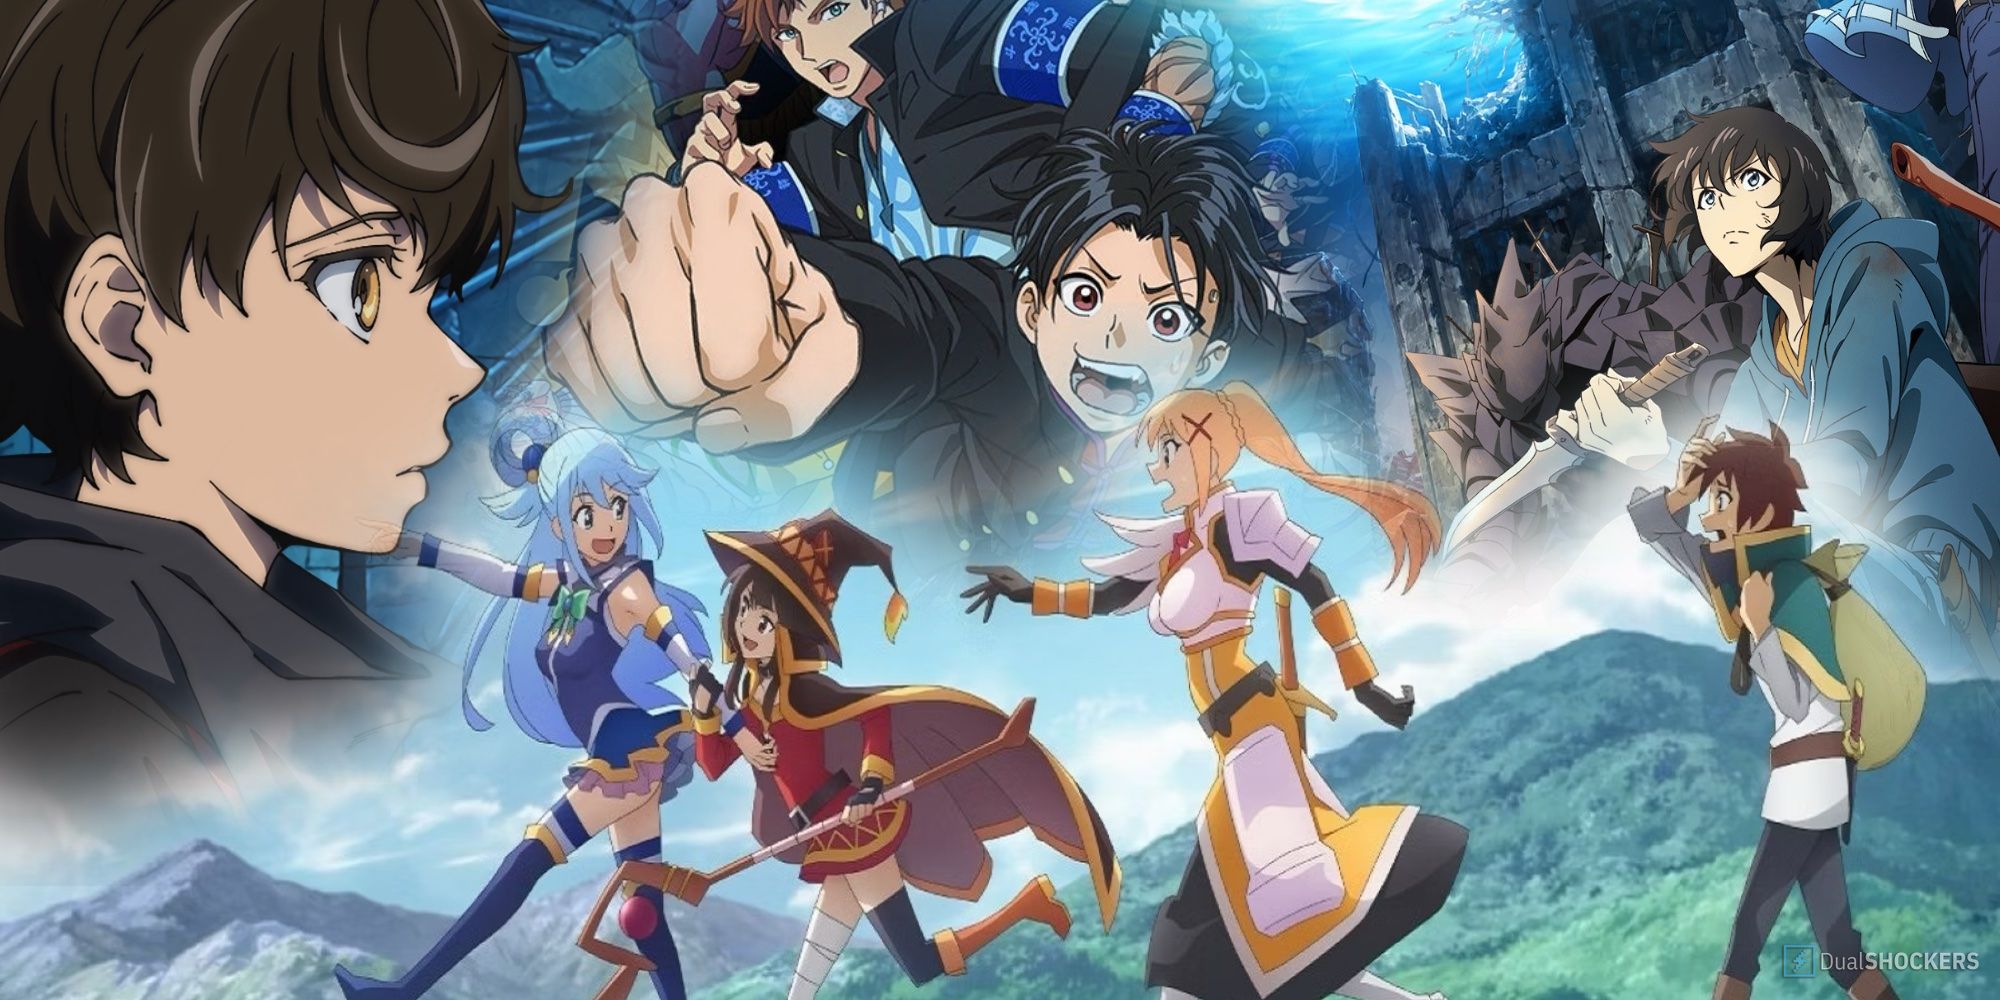 Anime - Latest News & Updates on Anime and Manga Series